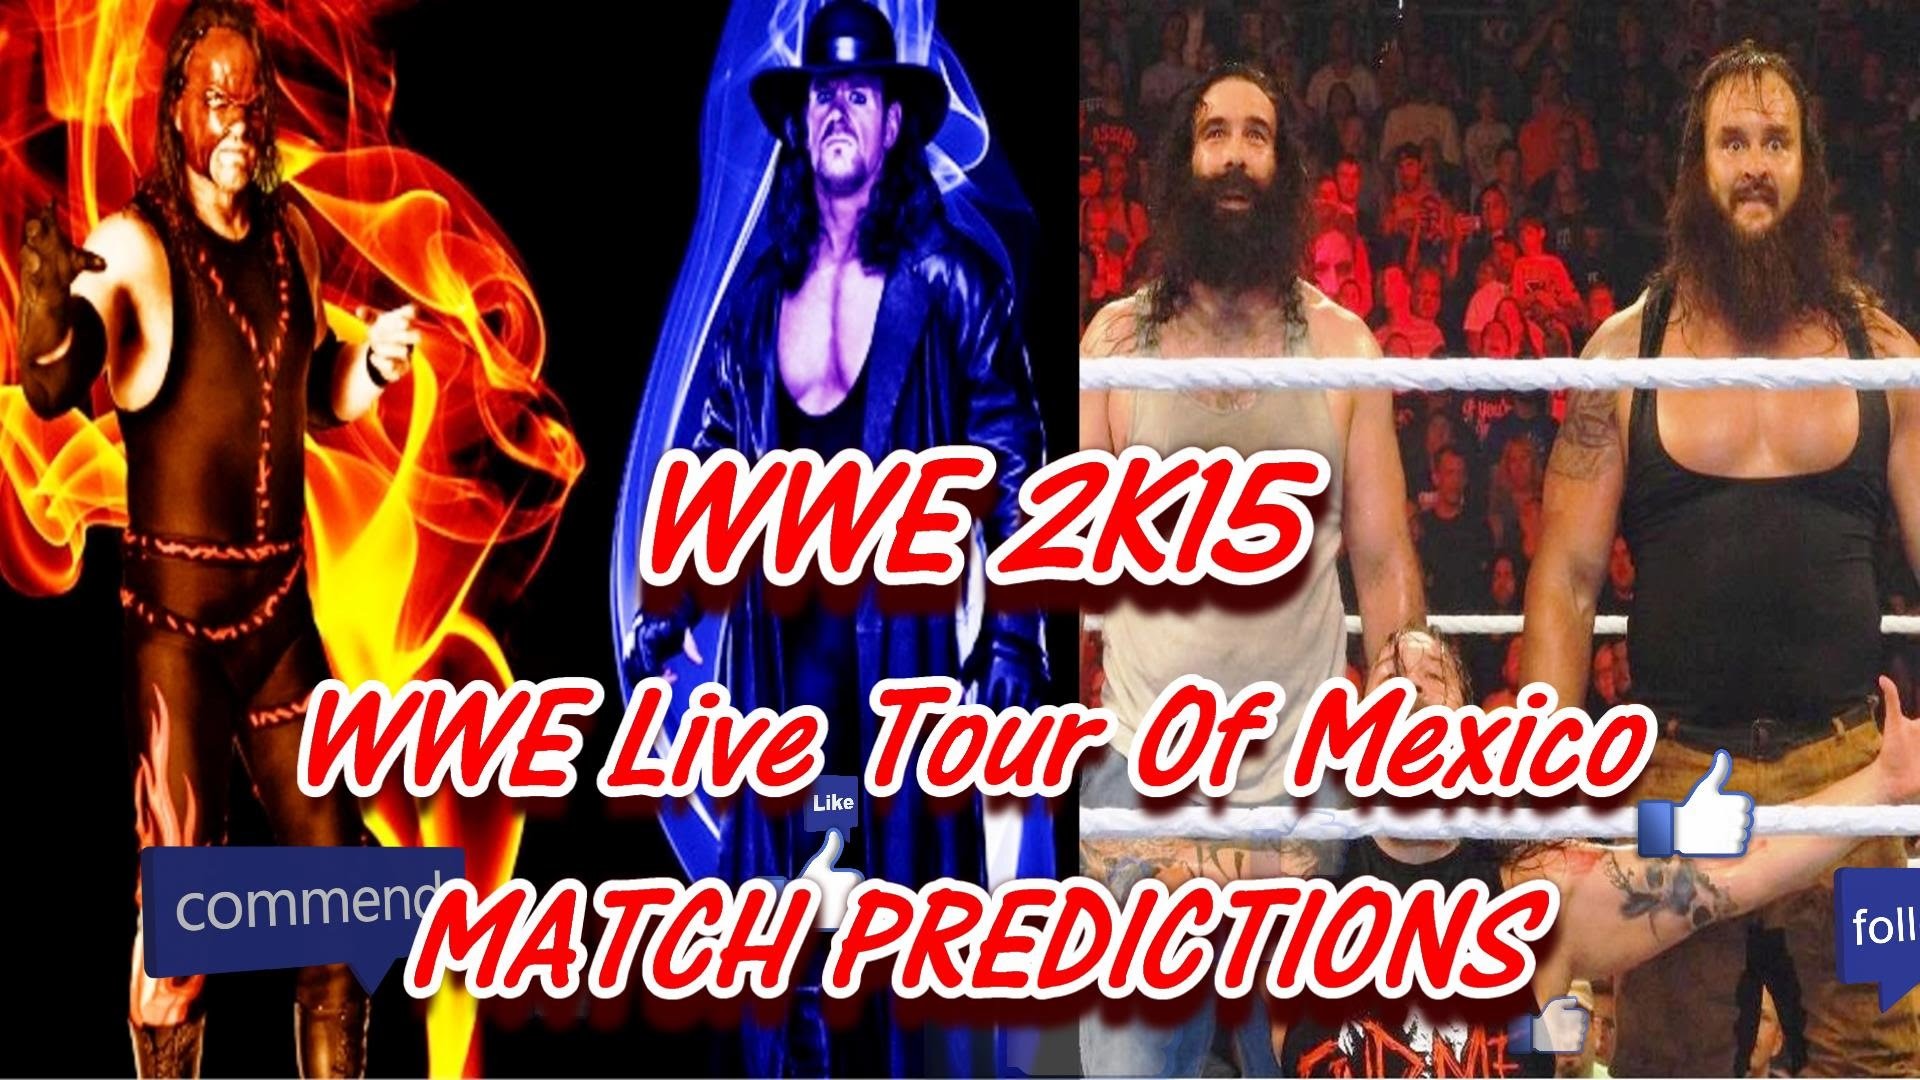 1920x1080 WWE Tour Of Mexico The Undertaker & Kane Vs. Luke Harper & Braun Strowman  WWE2K15 (Predictions) - YouTube